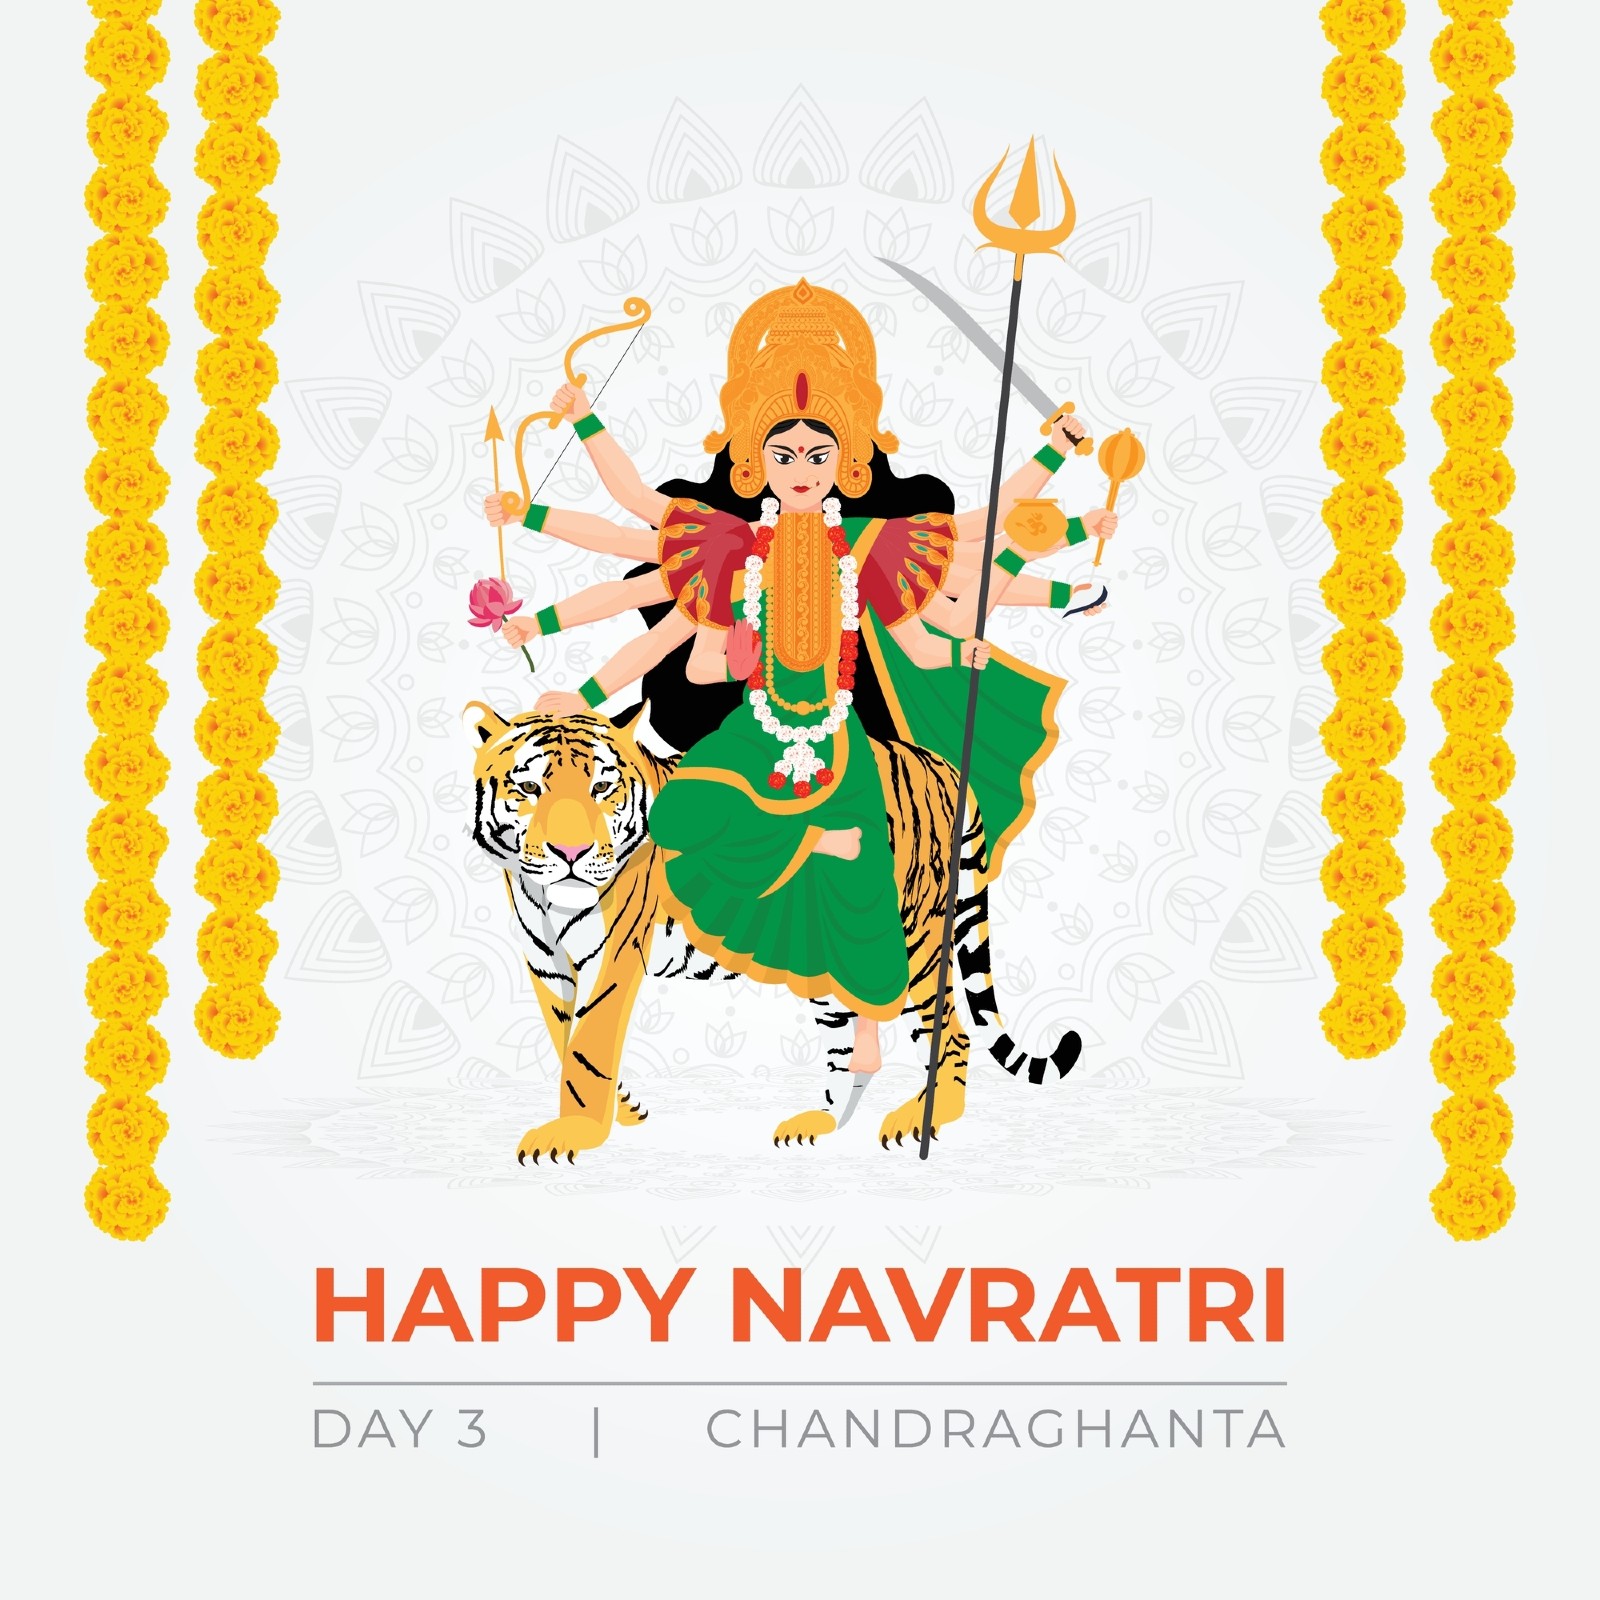 Navratri 2022: This year on the third day of Navratri, devotees will worship Goddess Chandraghanta in Shukla Tritiya on September 28. (Representative image: Shutterstock)